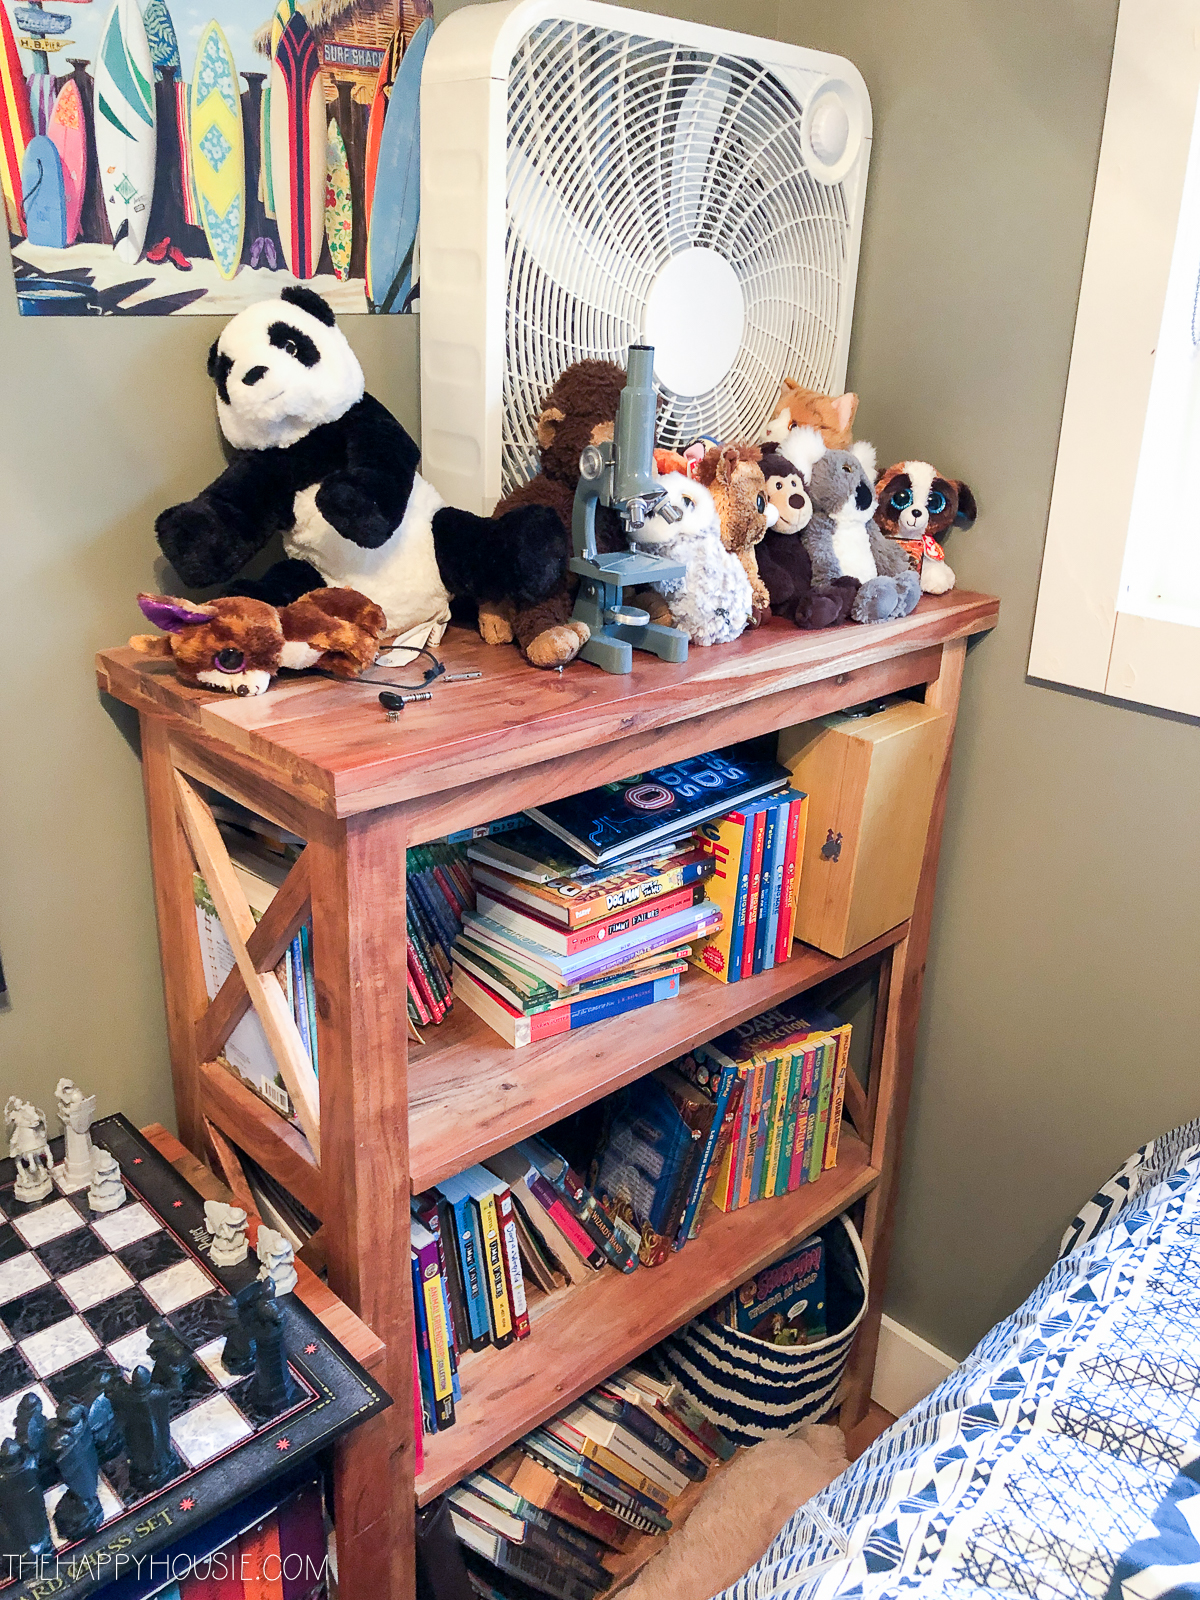 A bookshelf has all the books and stuffed animals.